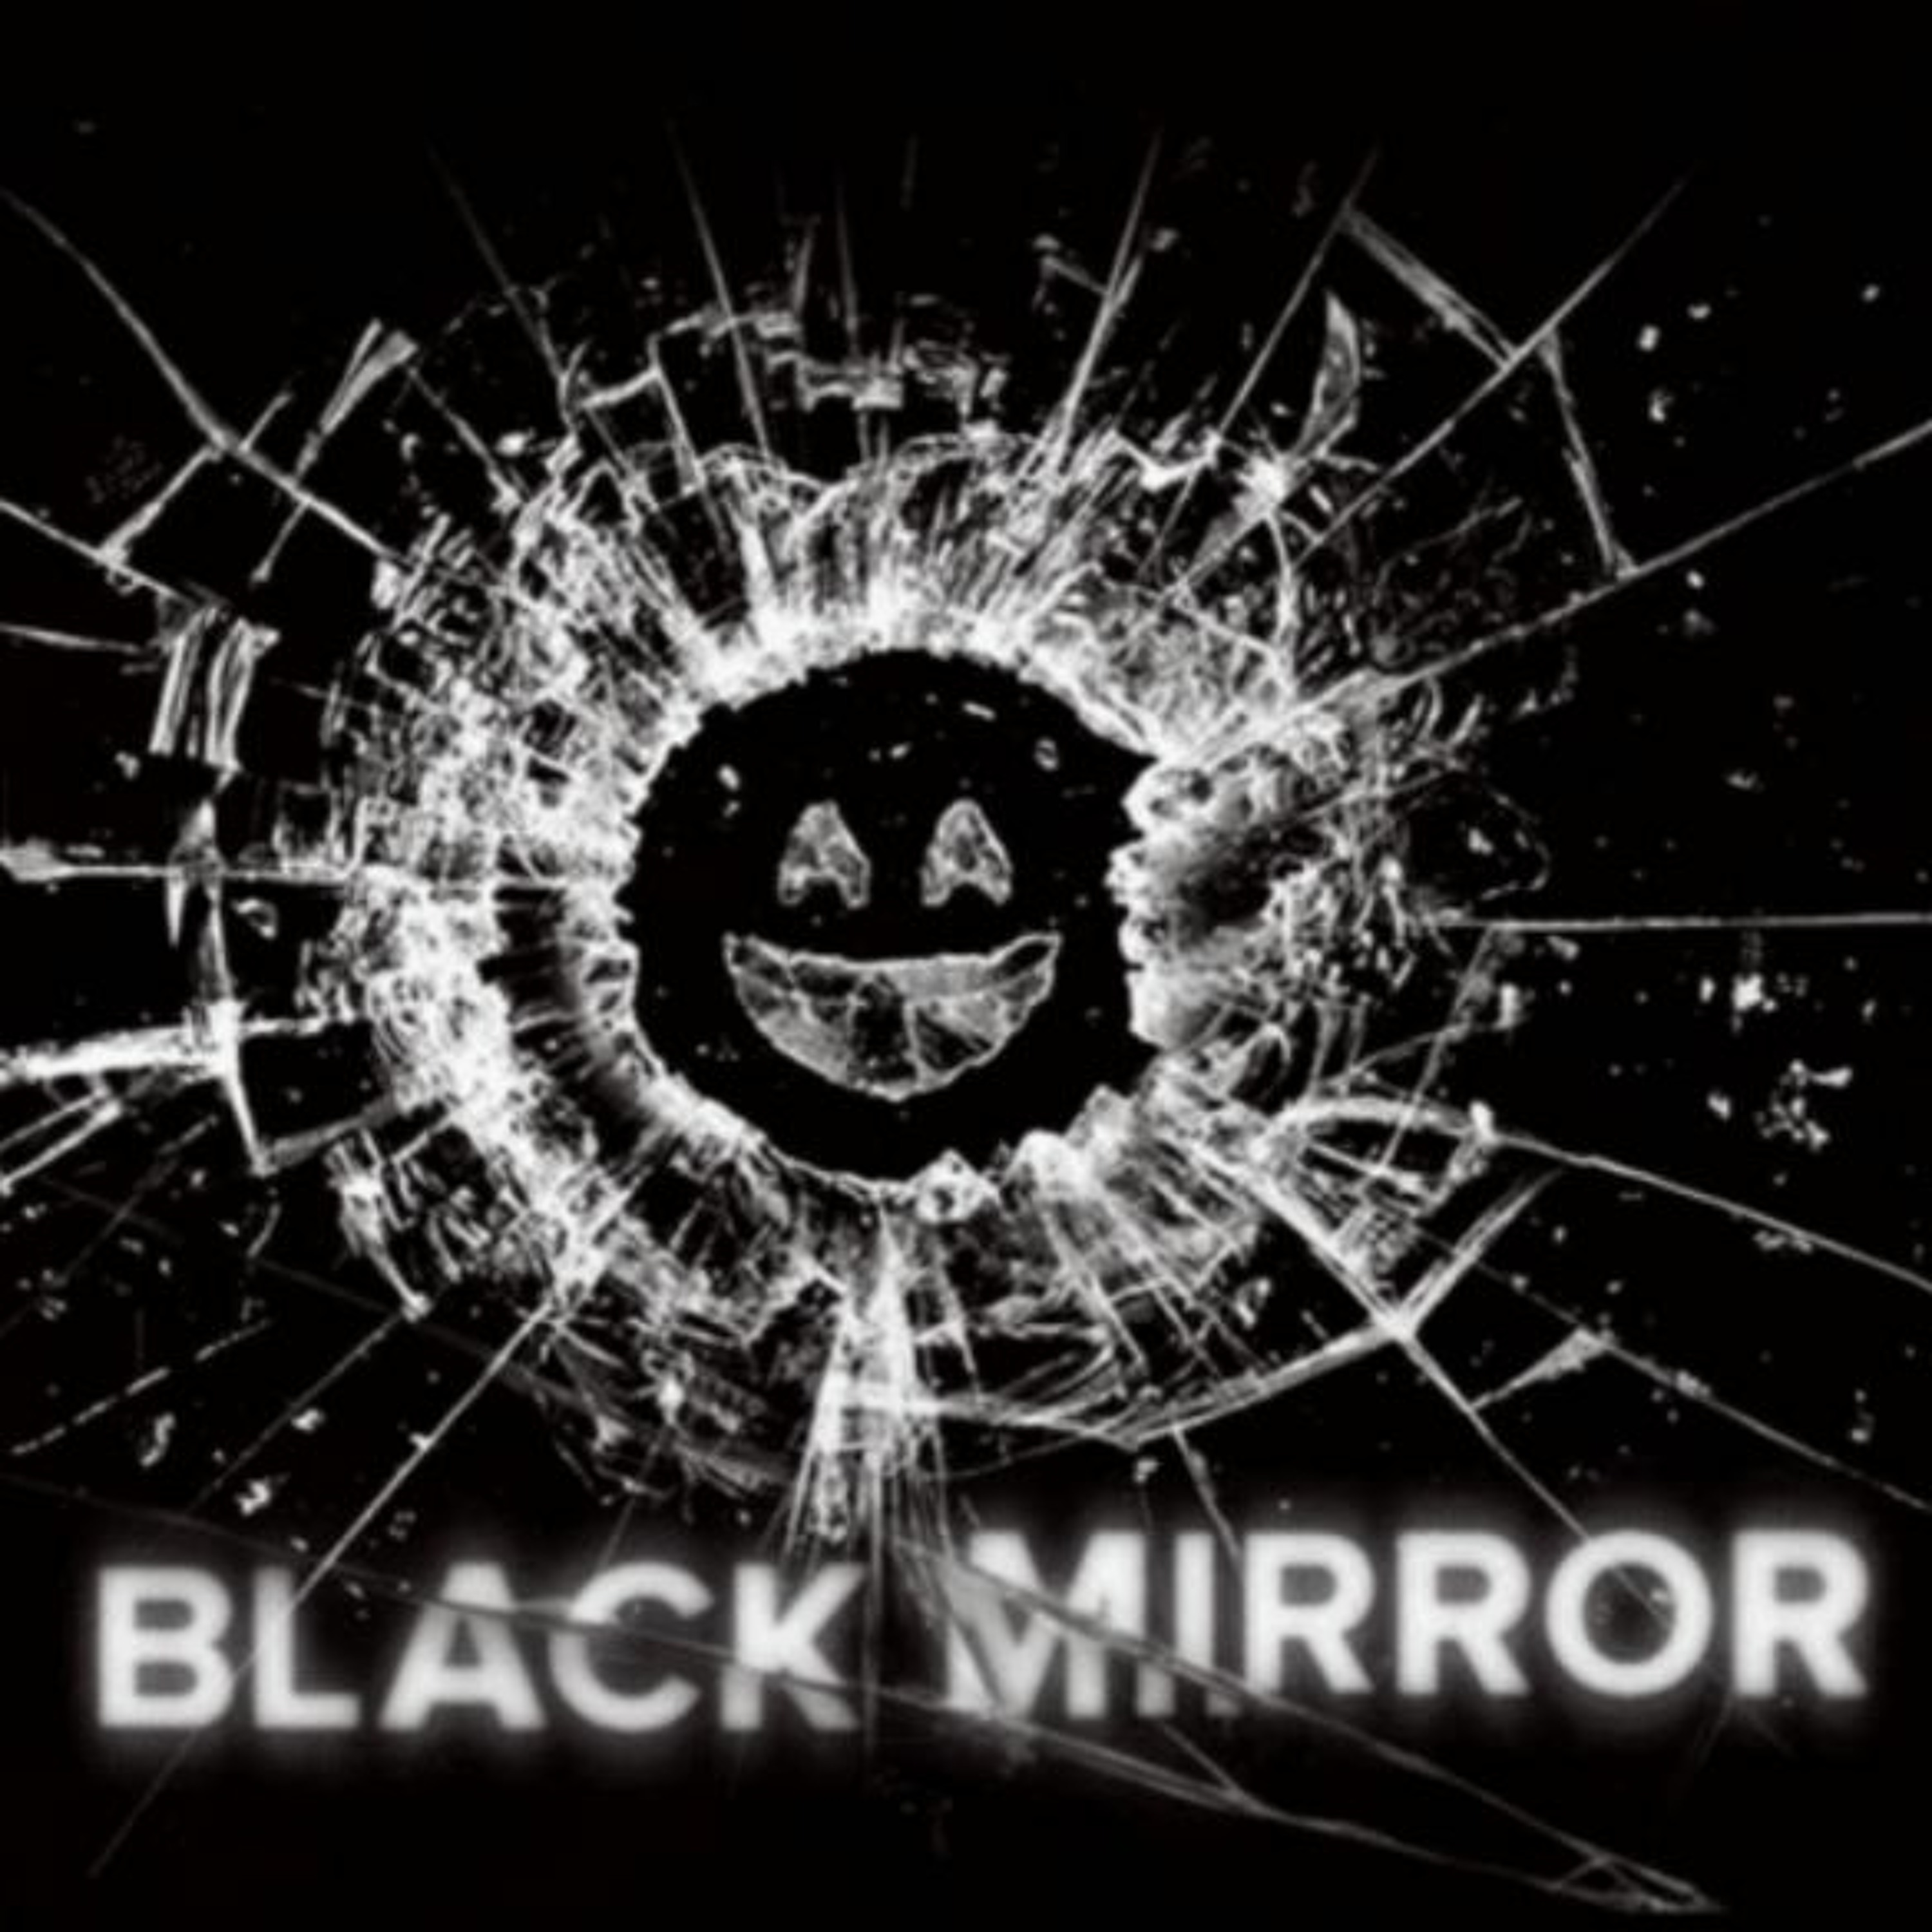 Emmys & Black Mirror Season 5 Recap!